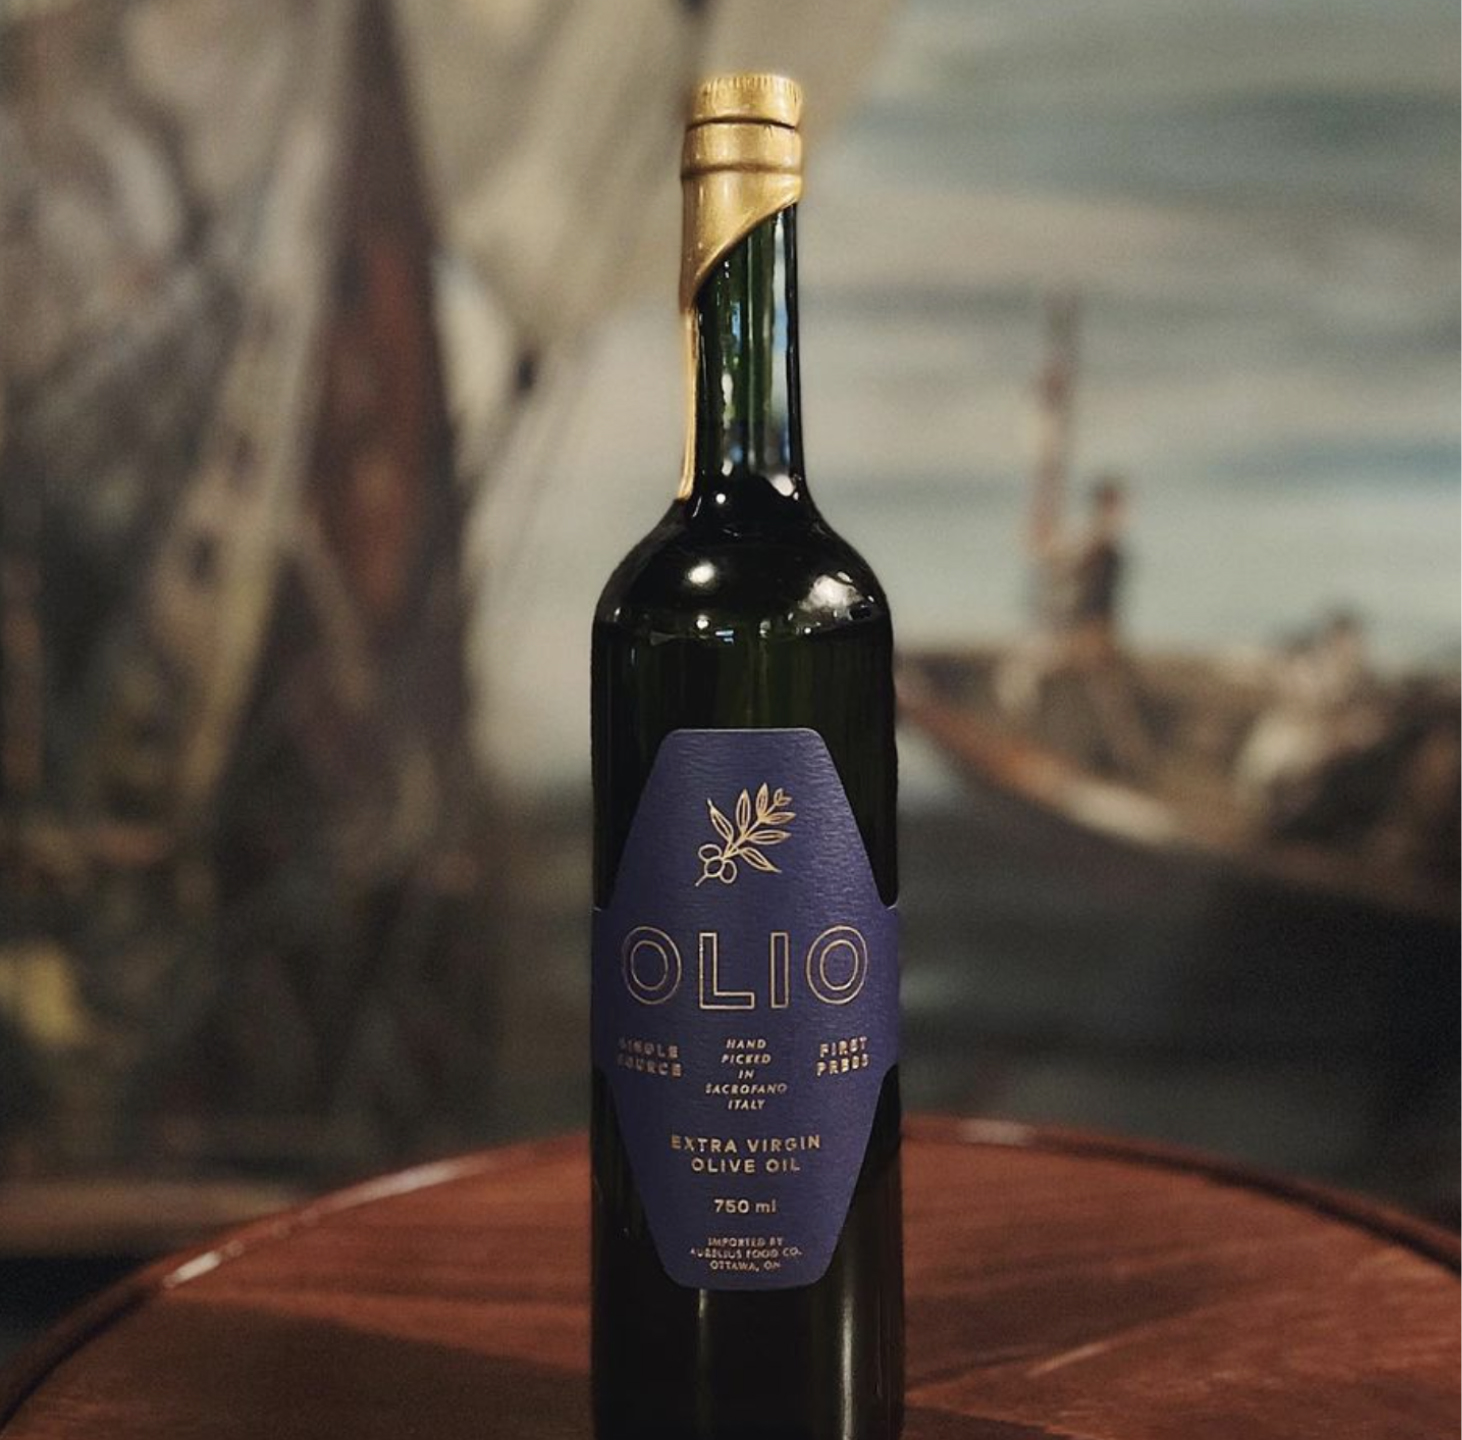 Bottle of North & Navy branded olive oil, Olio. 